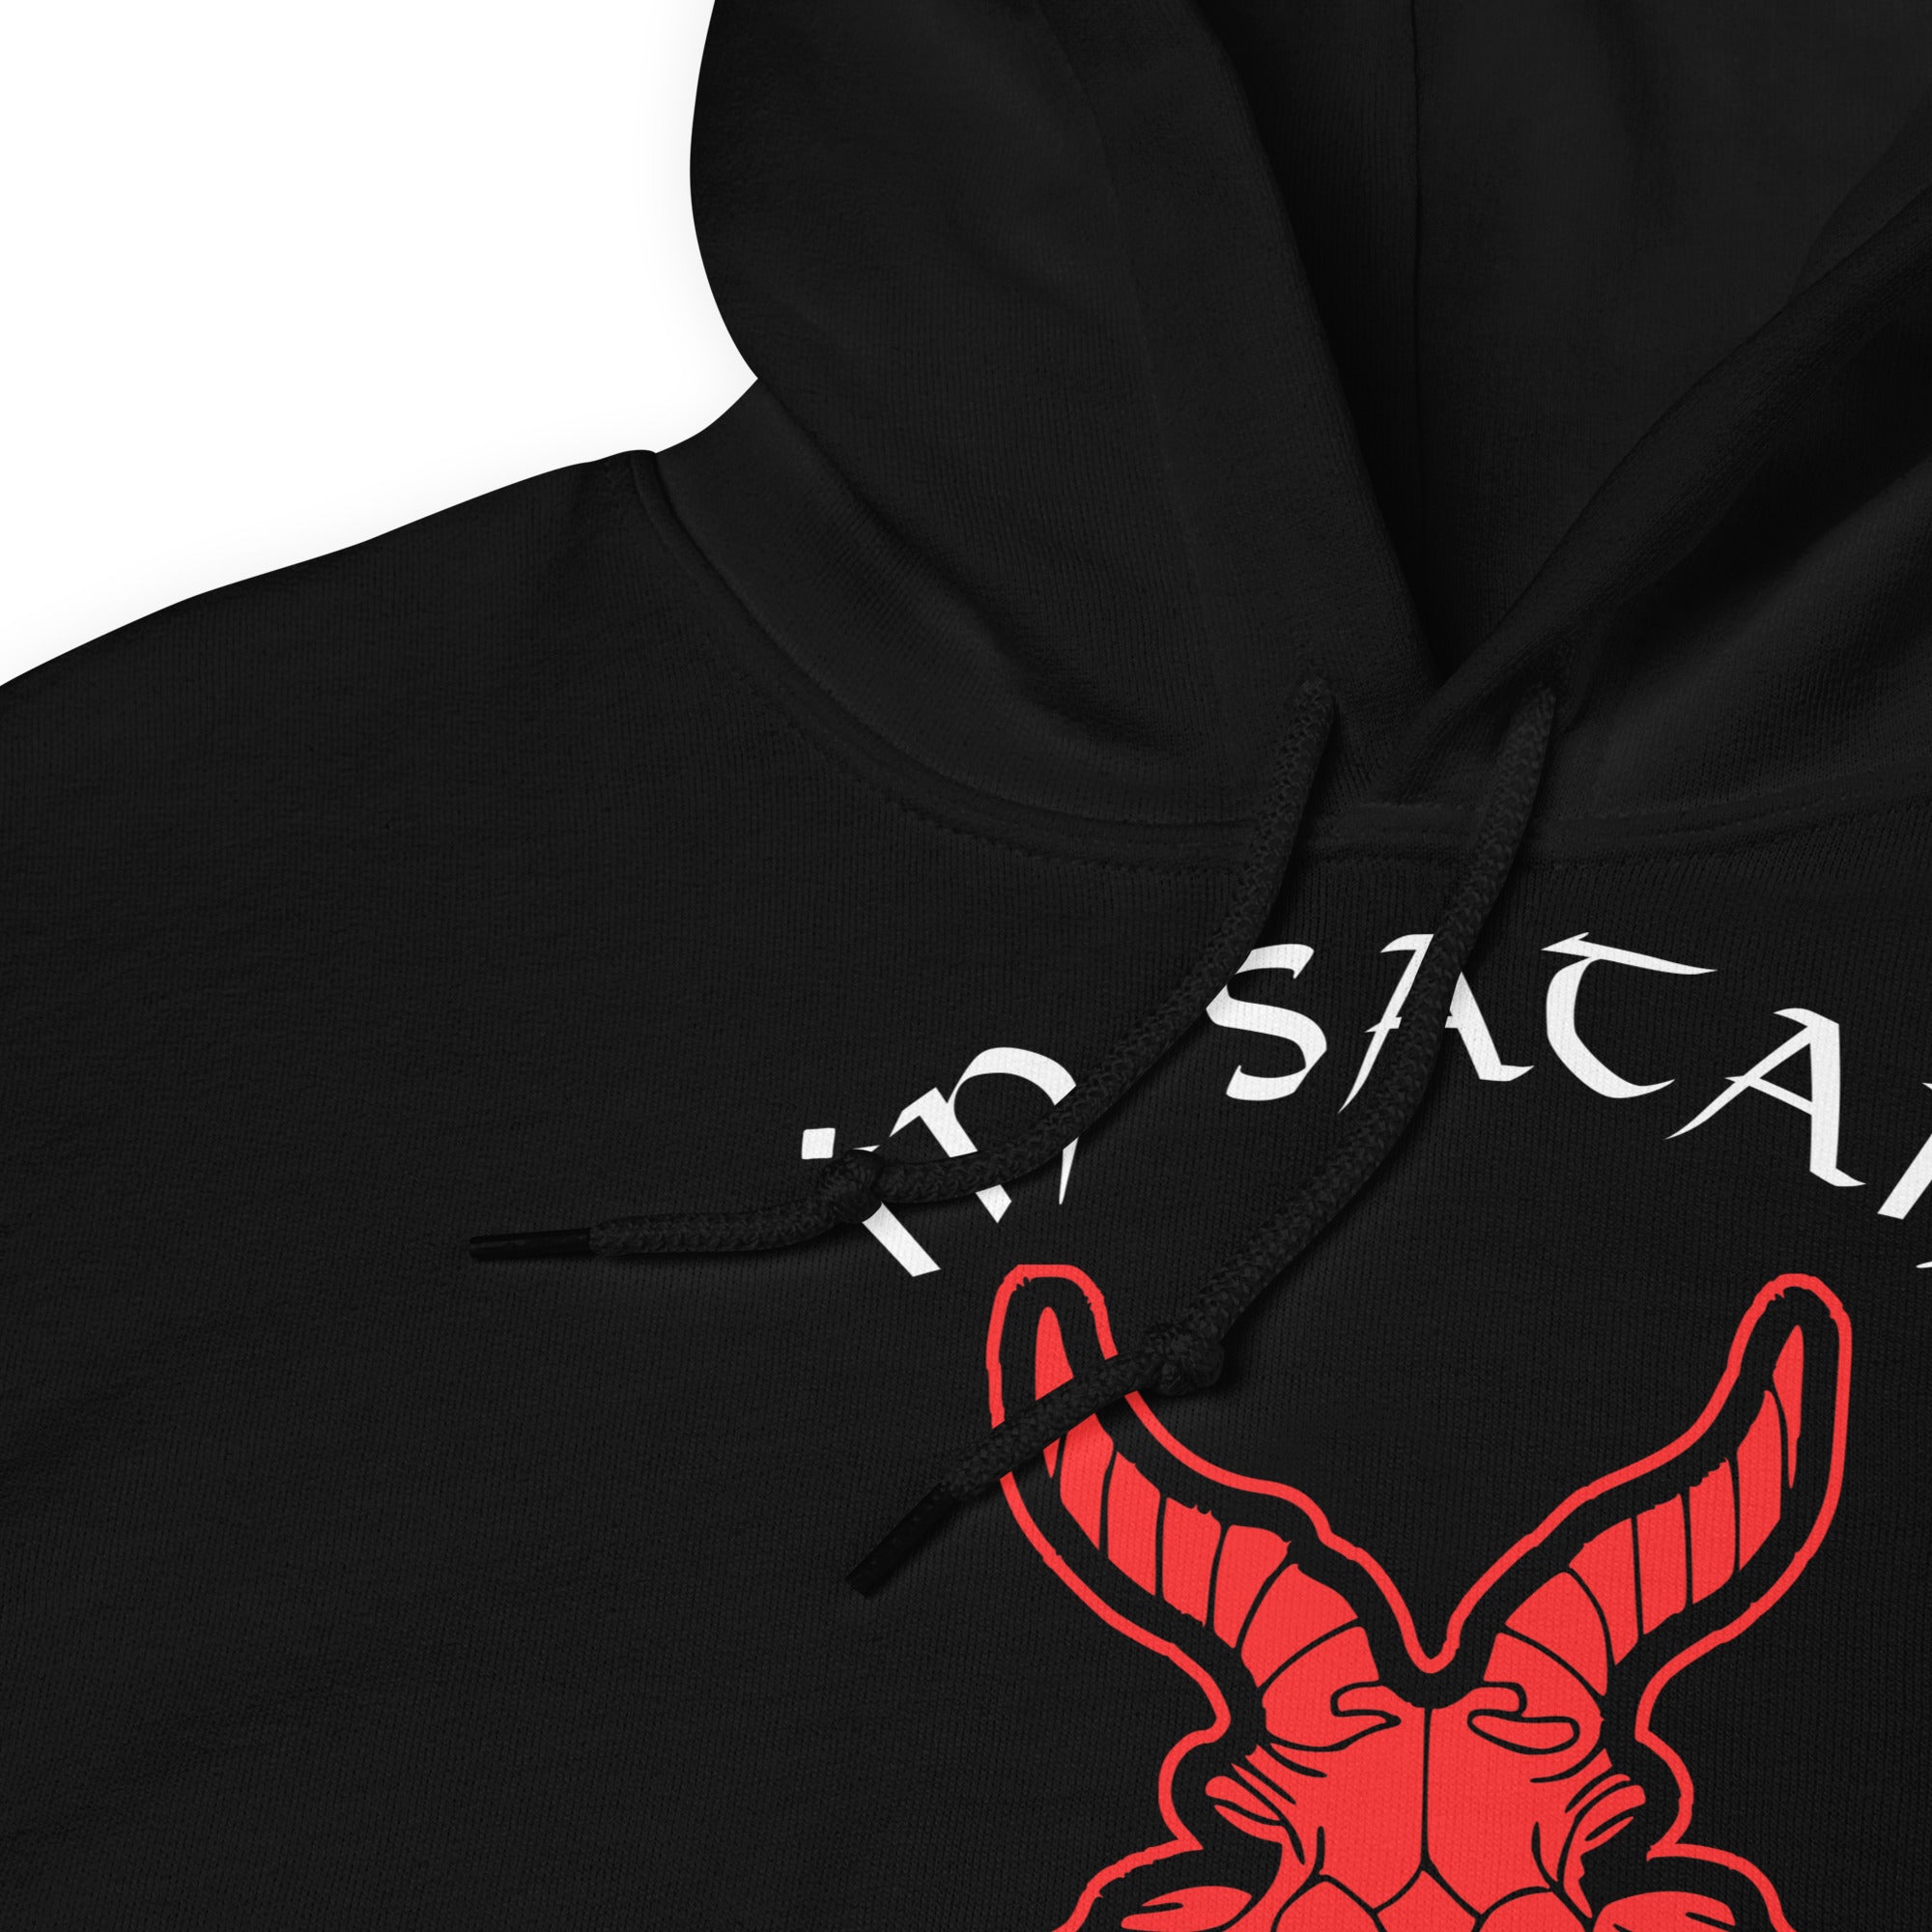 In Satan We Trust 666 Goat Head Occult Unisex Hoodie Sweatshirt